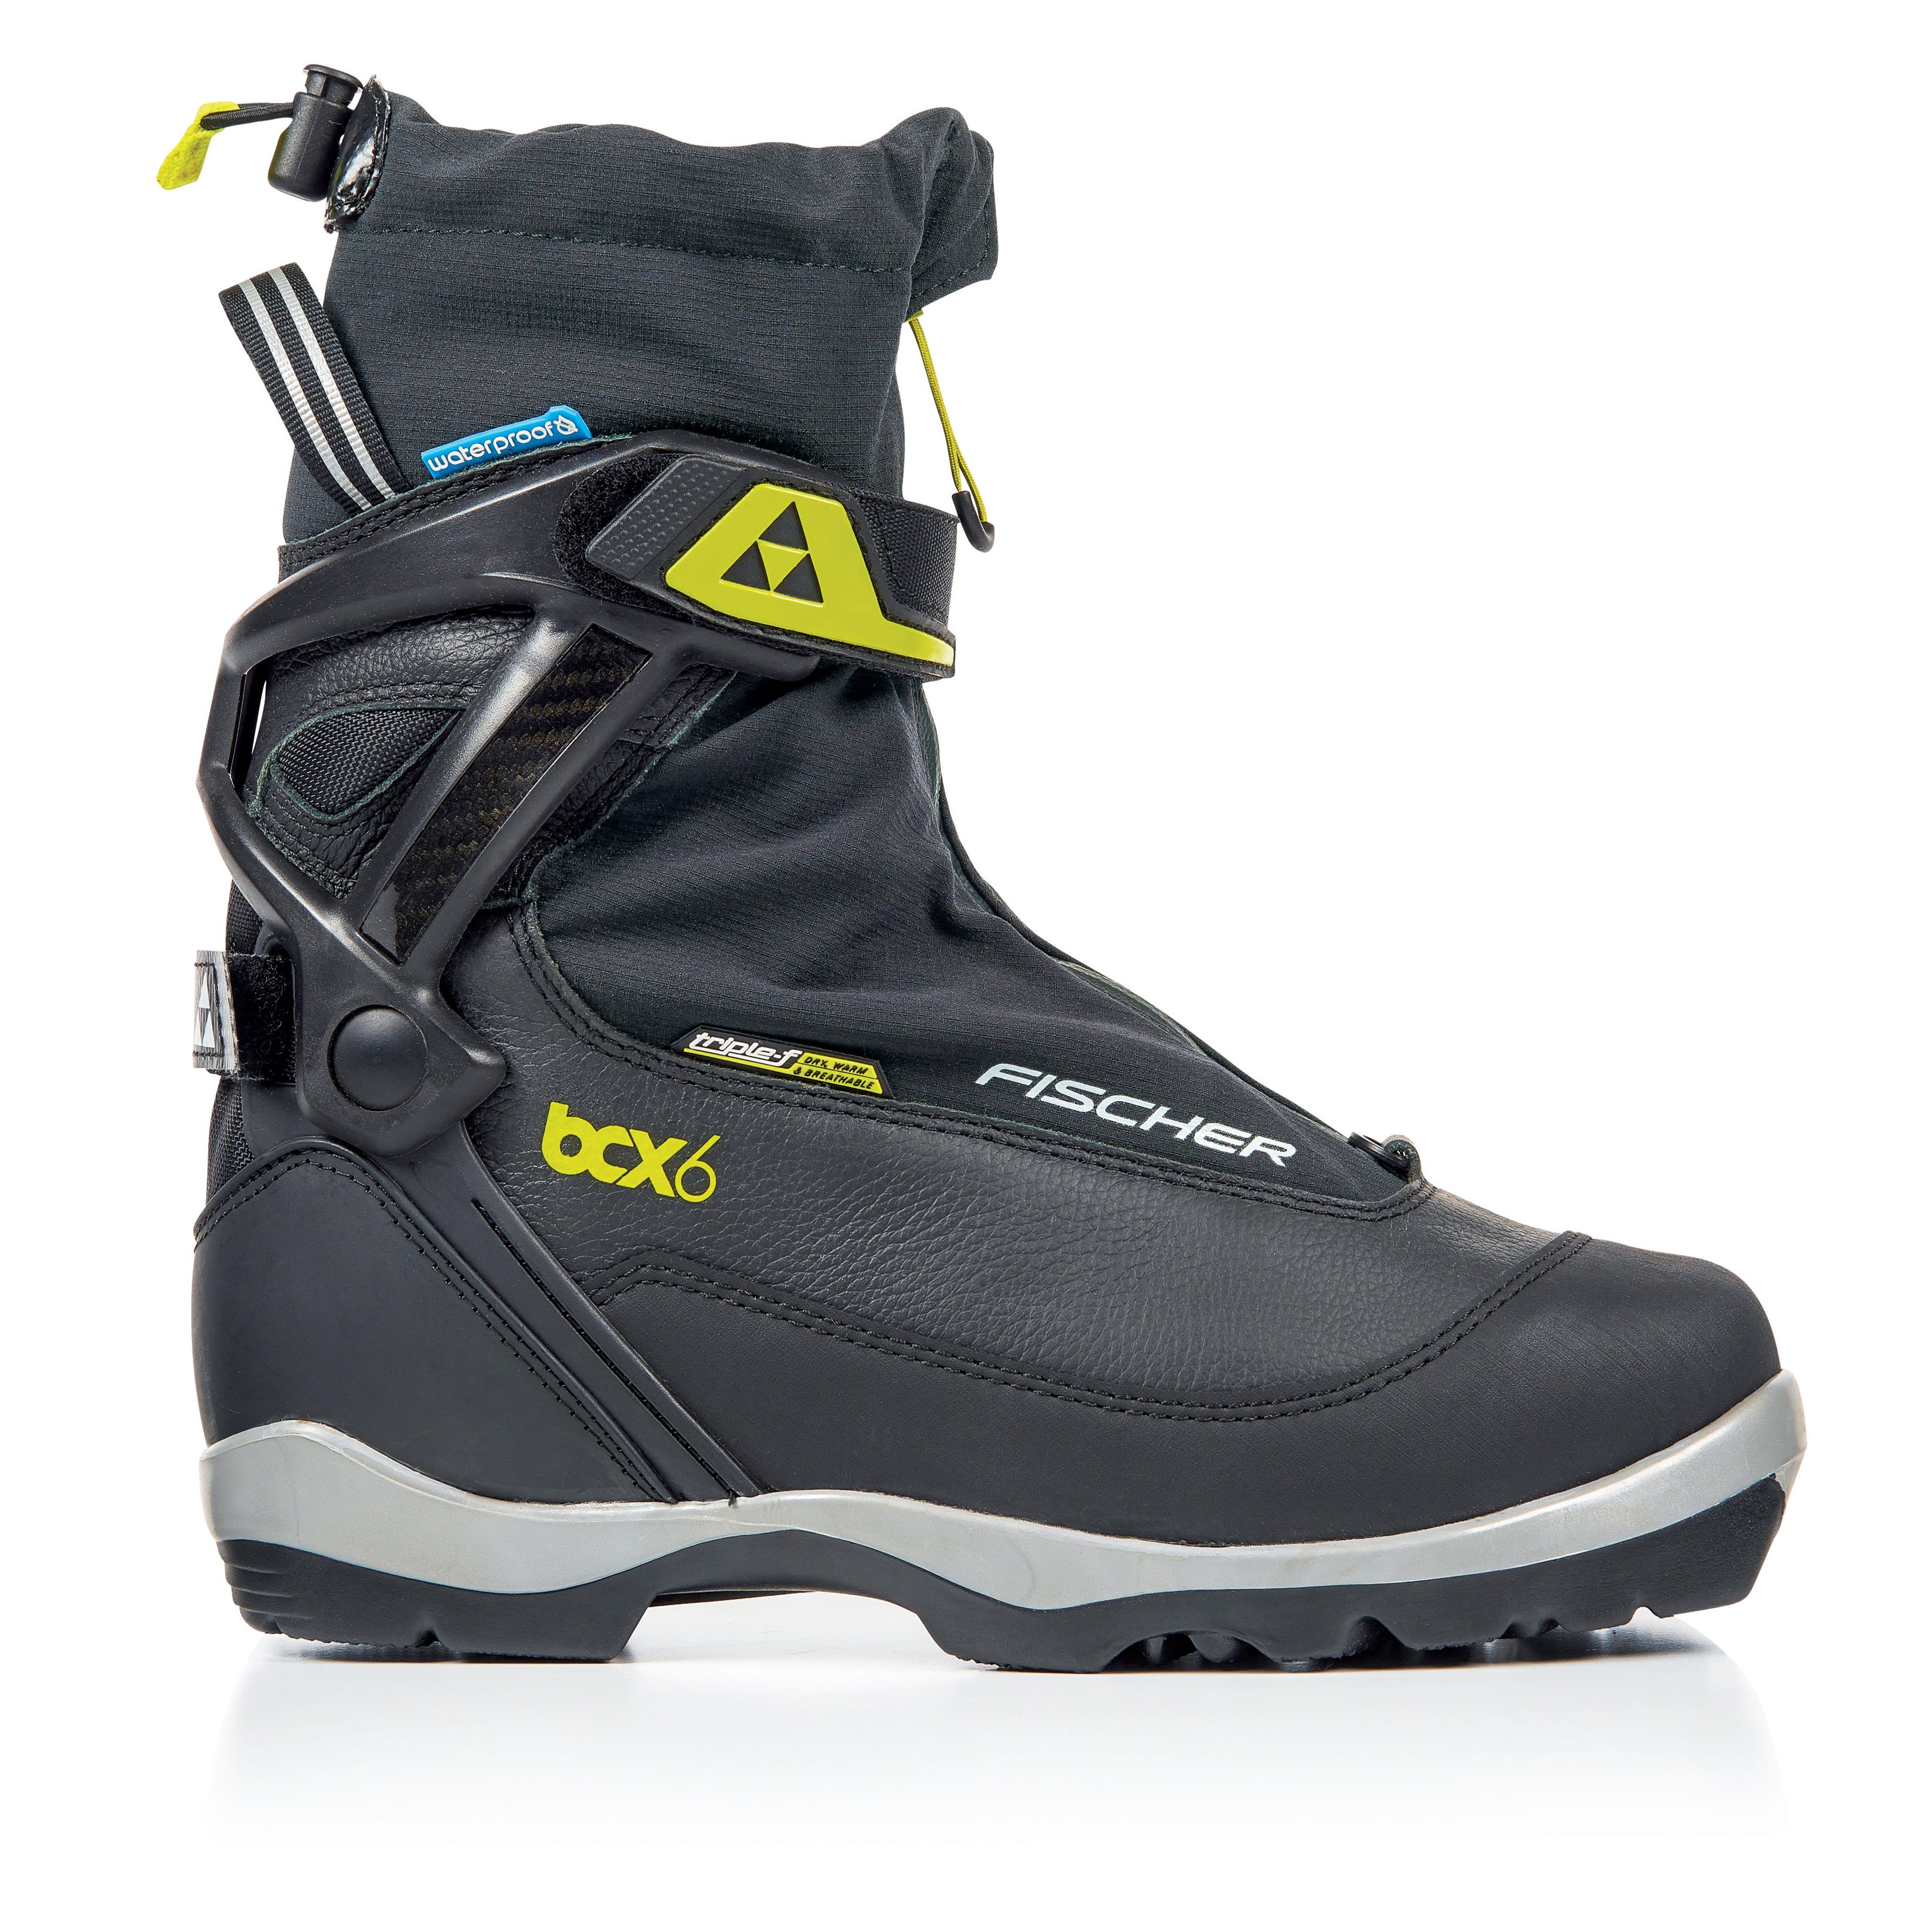 Fischer BCX 6 Waterproof Backcountry Boot 